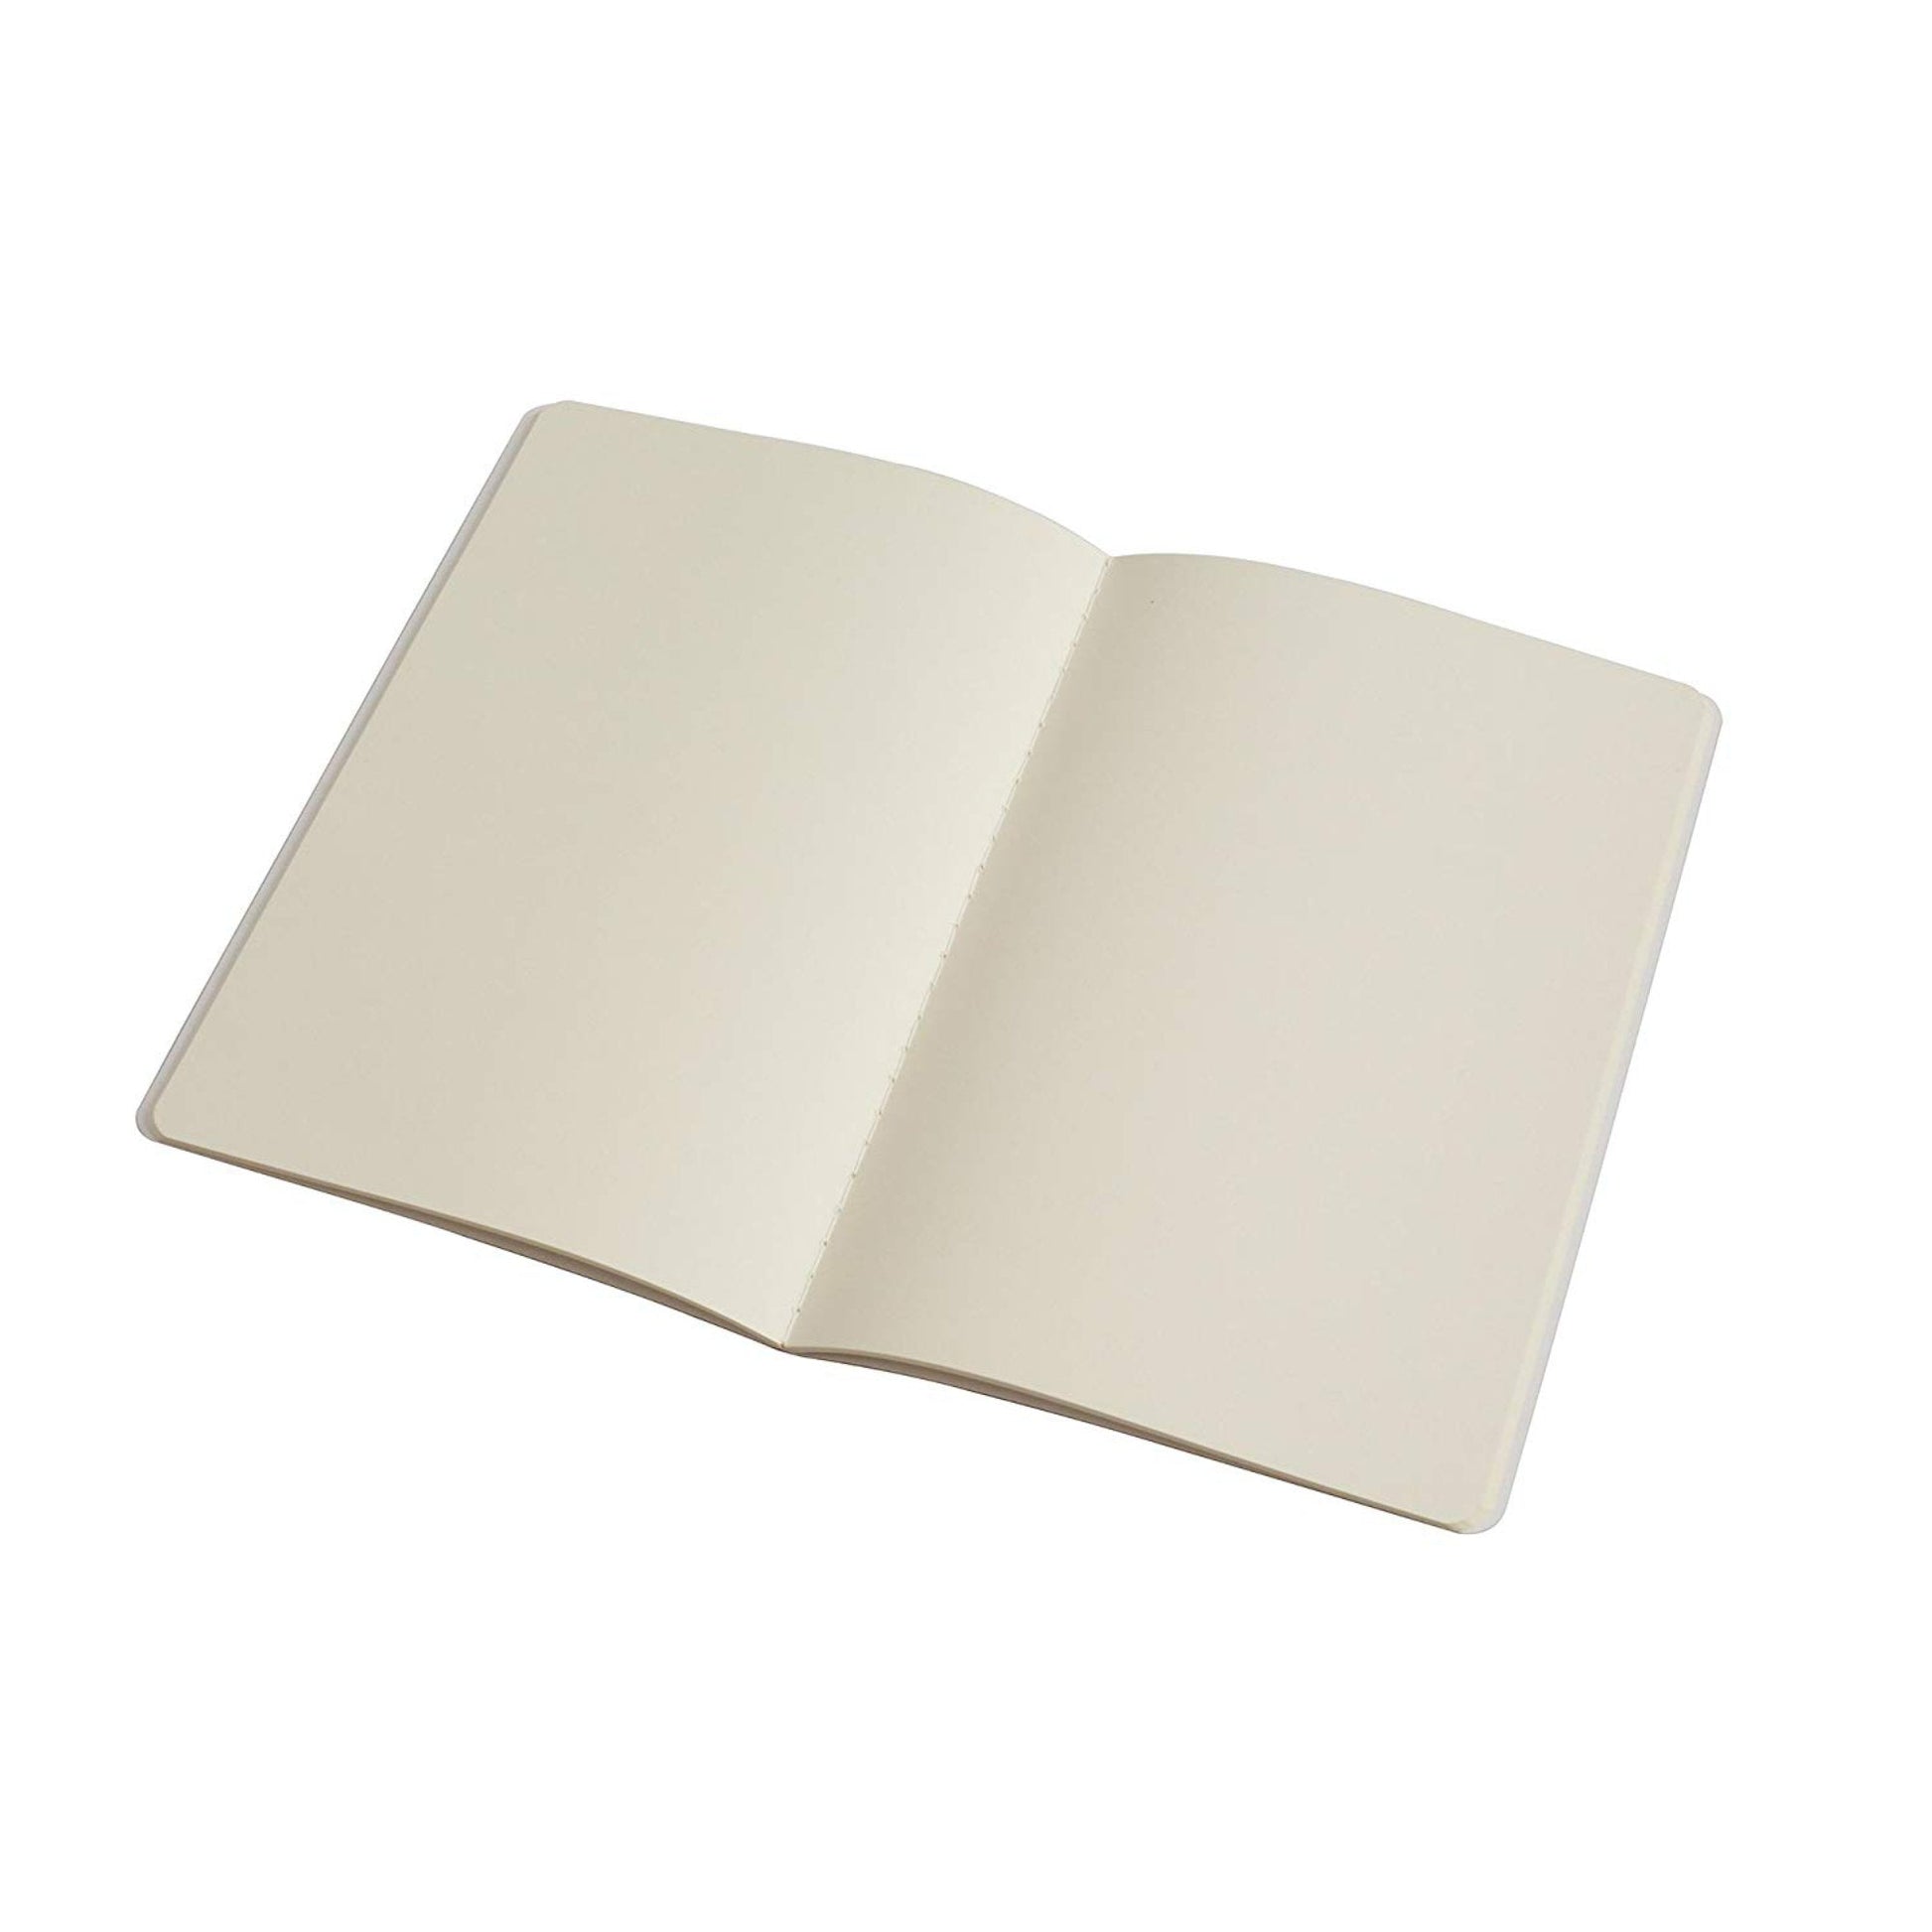 PinkPolish Design Notebook "Cotton Tails" Bunny Inspired Notebook / Sketchbook / Journal